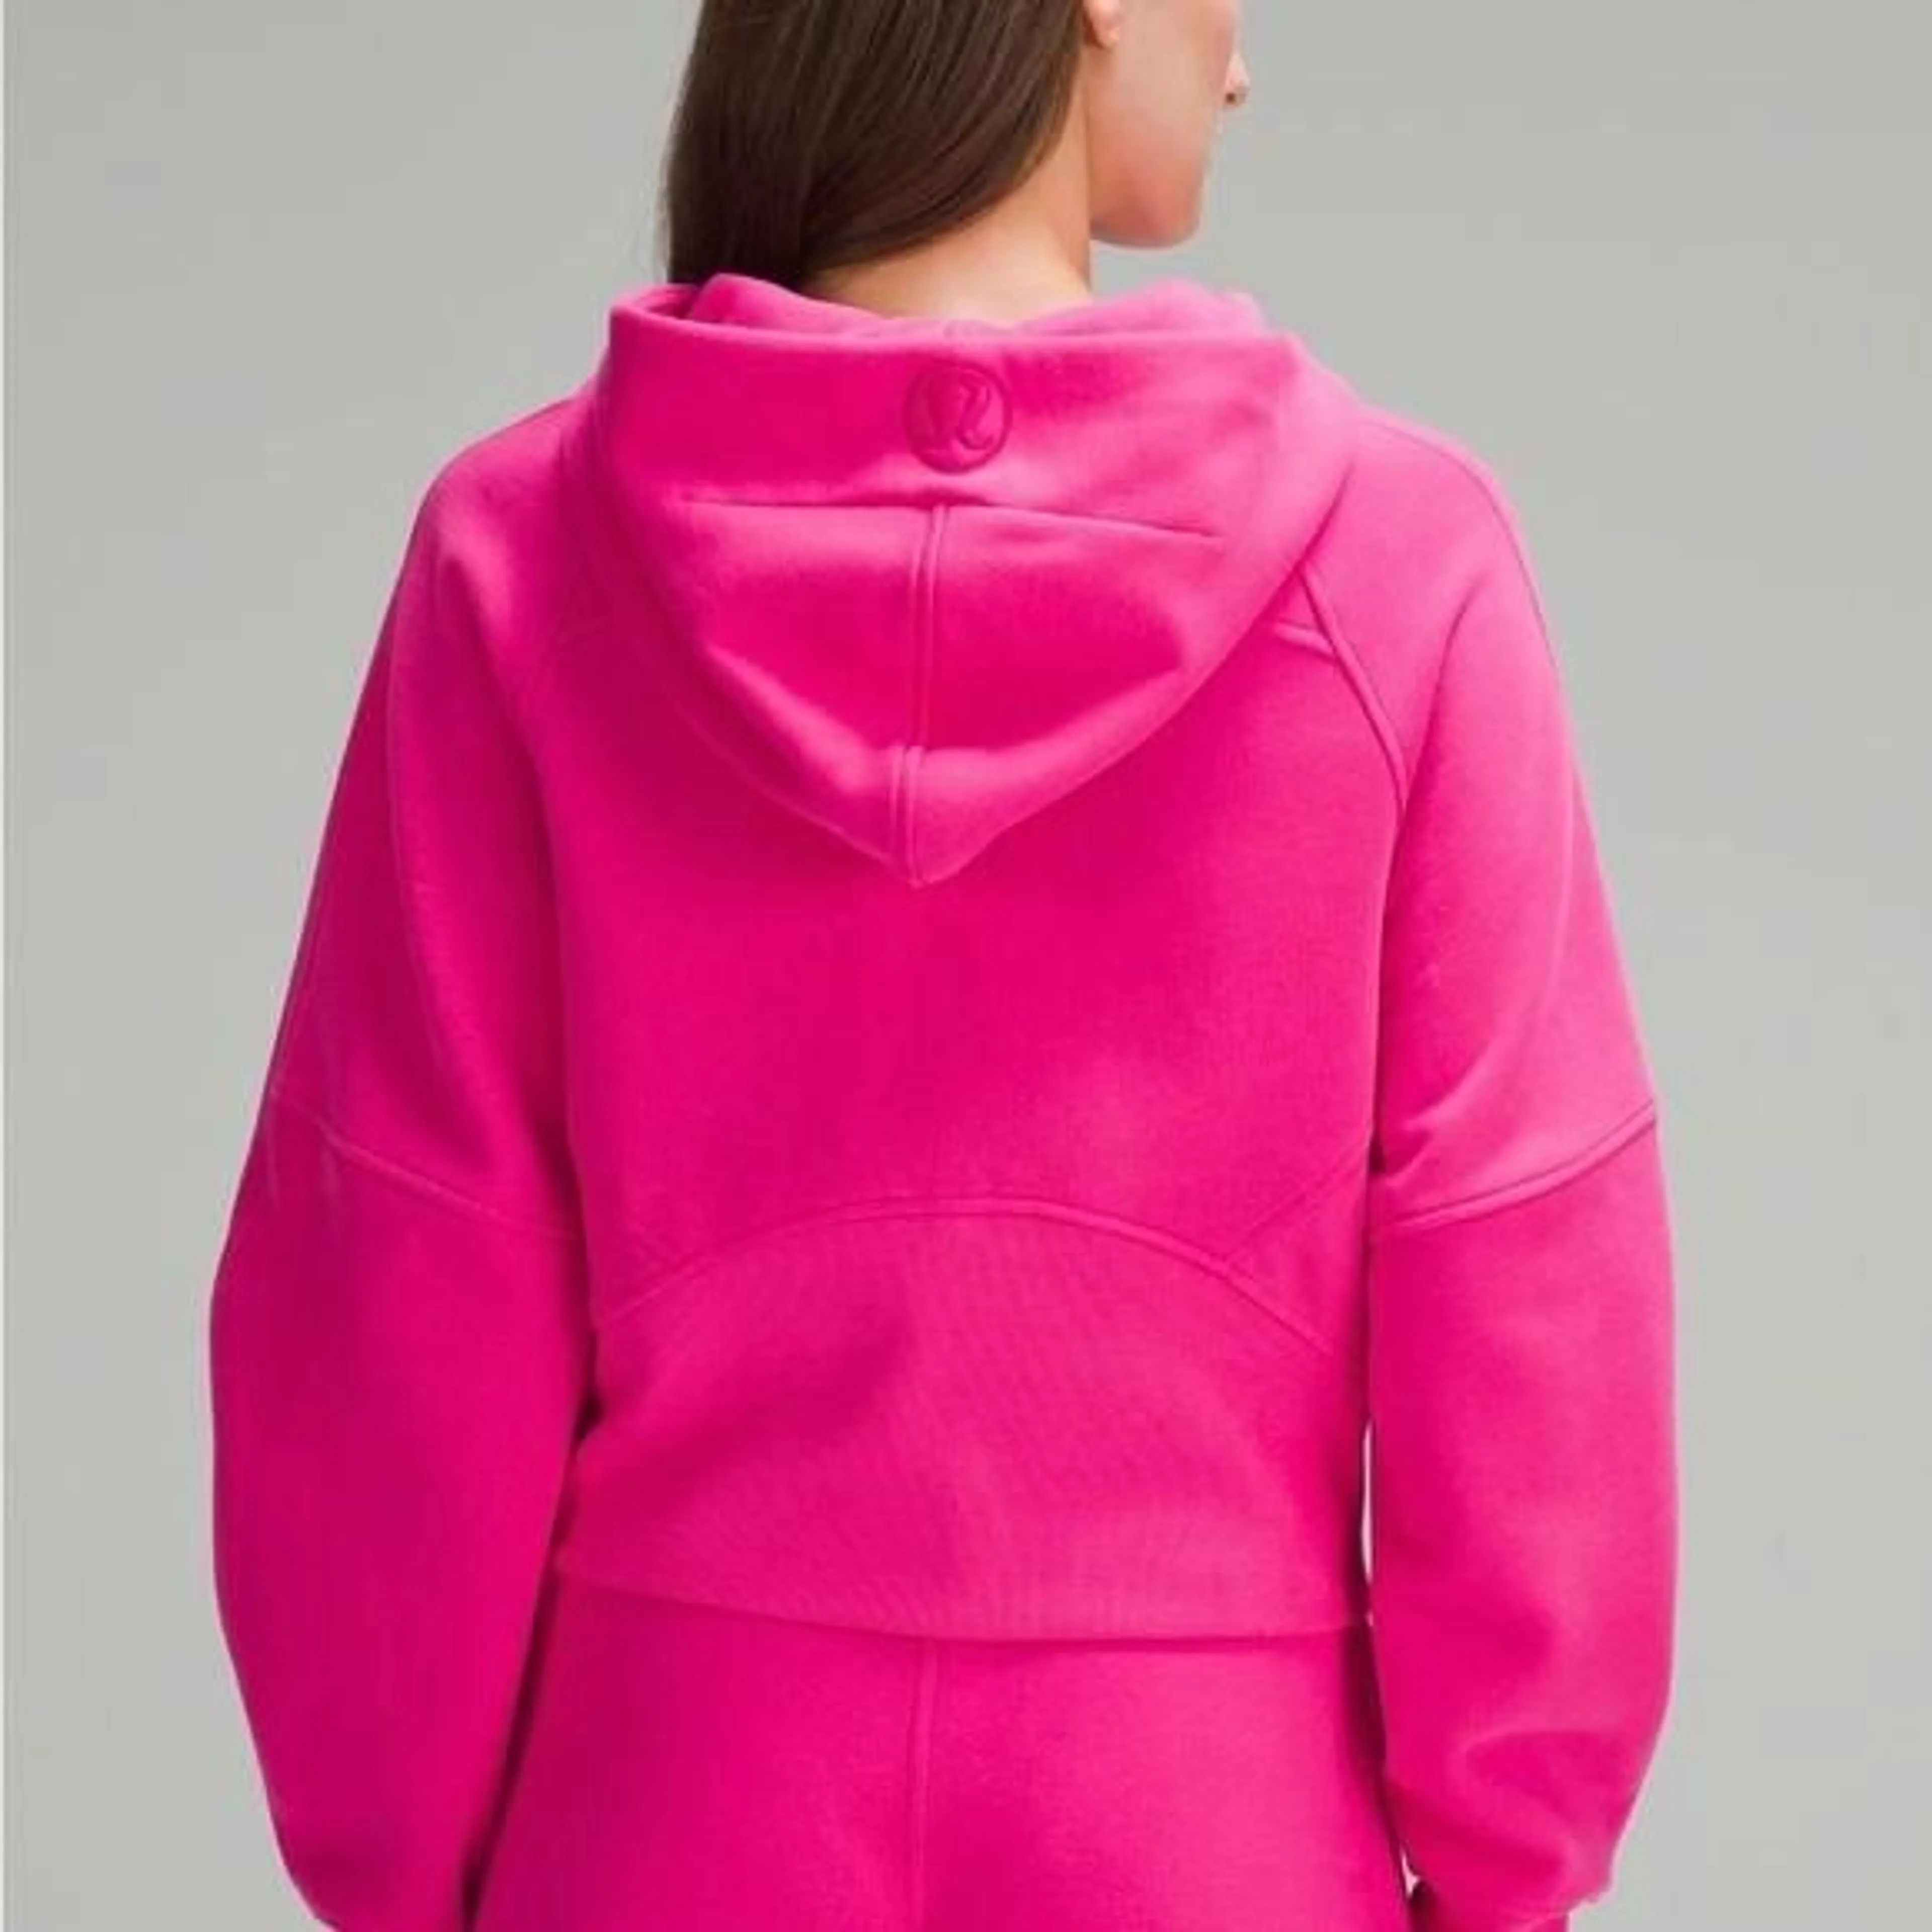 lululemon scuba oversized half zip hoodie Size XL/XXL Pink